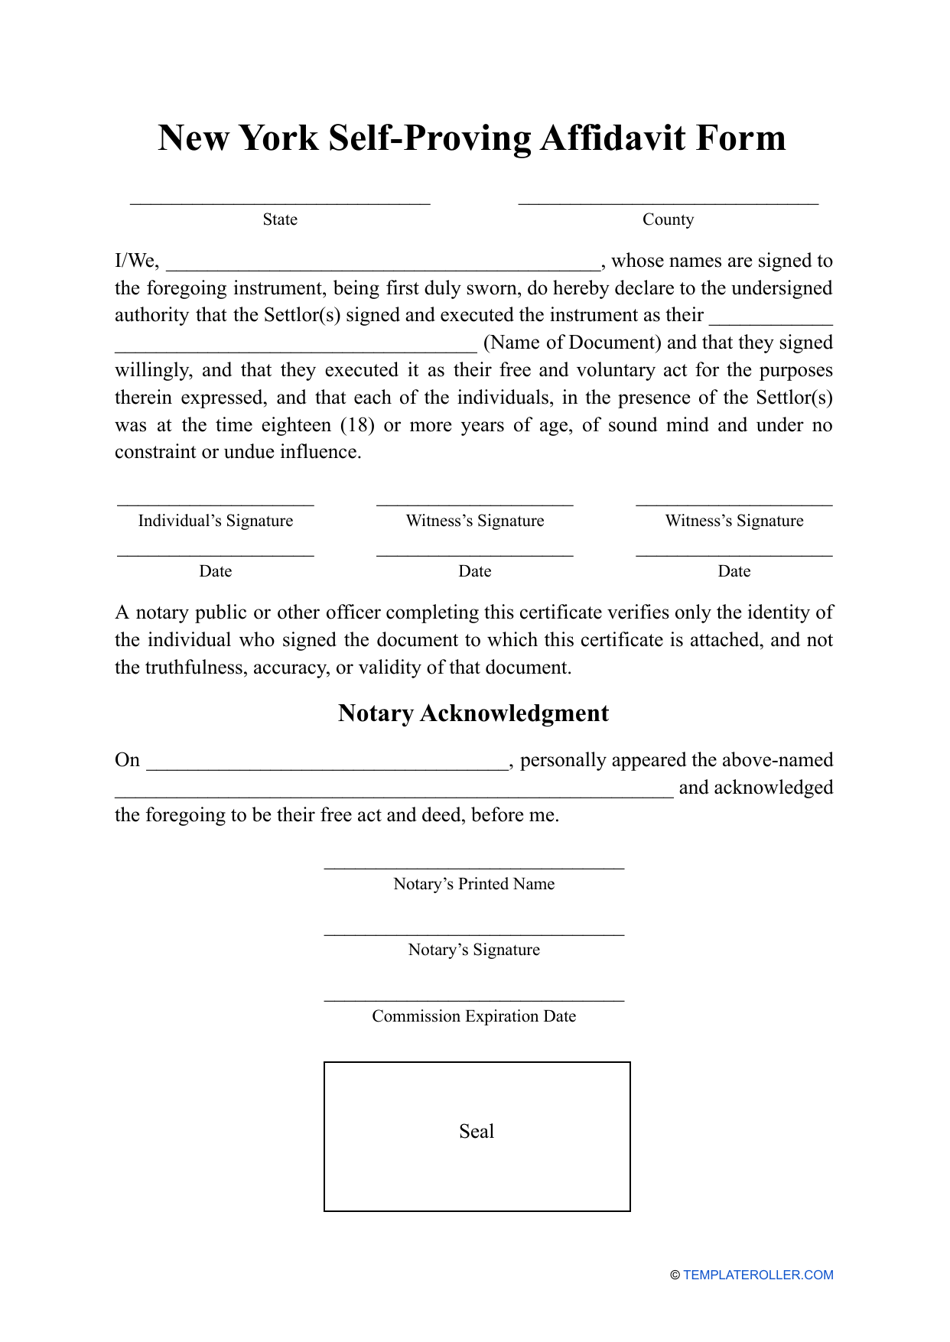 Self-proving Affidavit Form - New York, Page 1